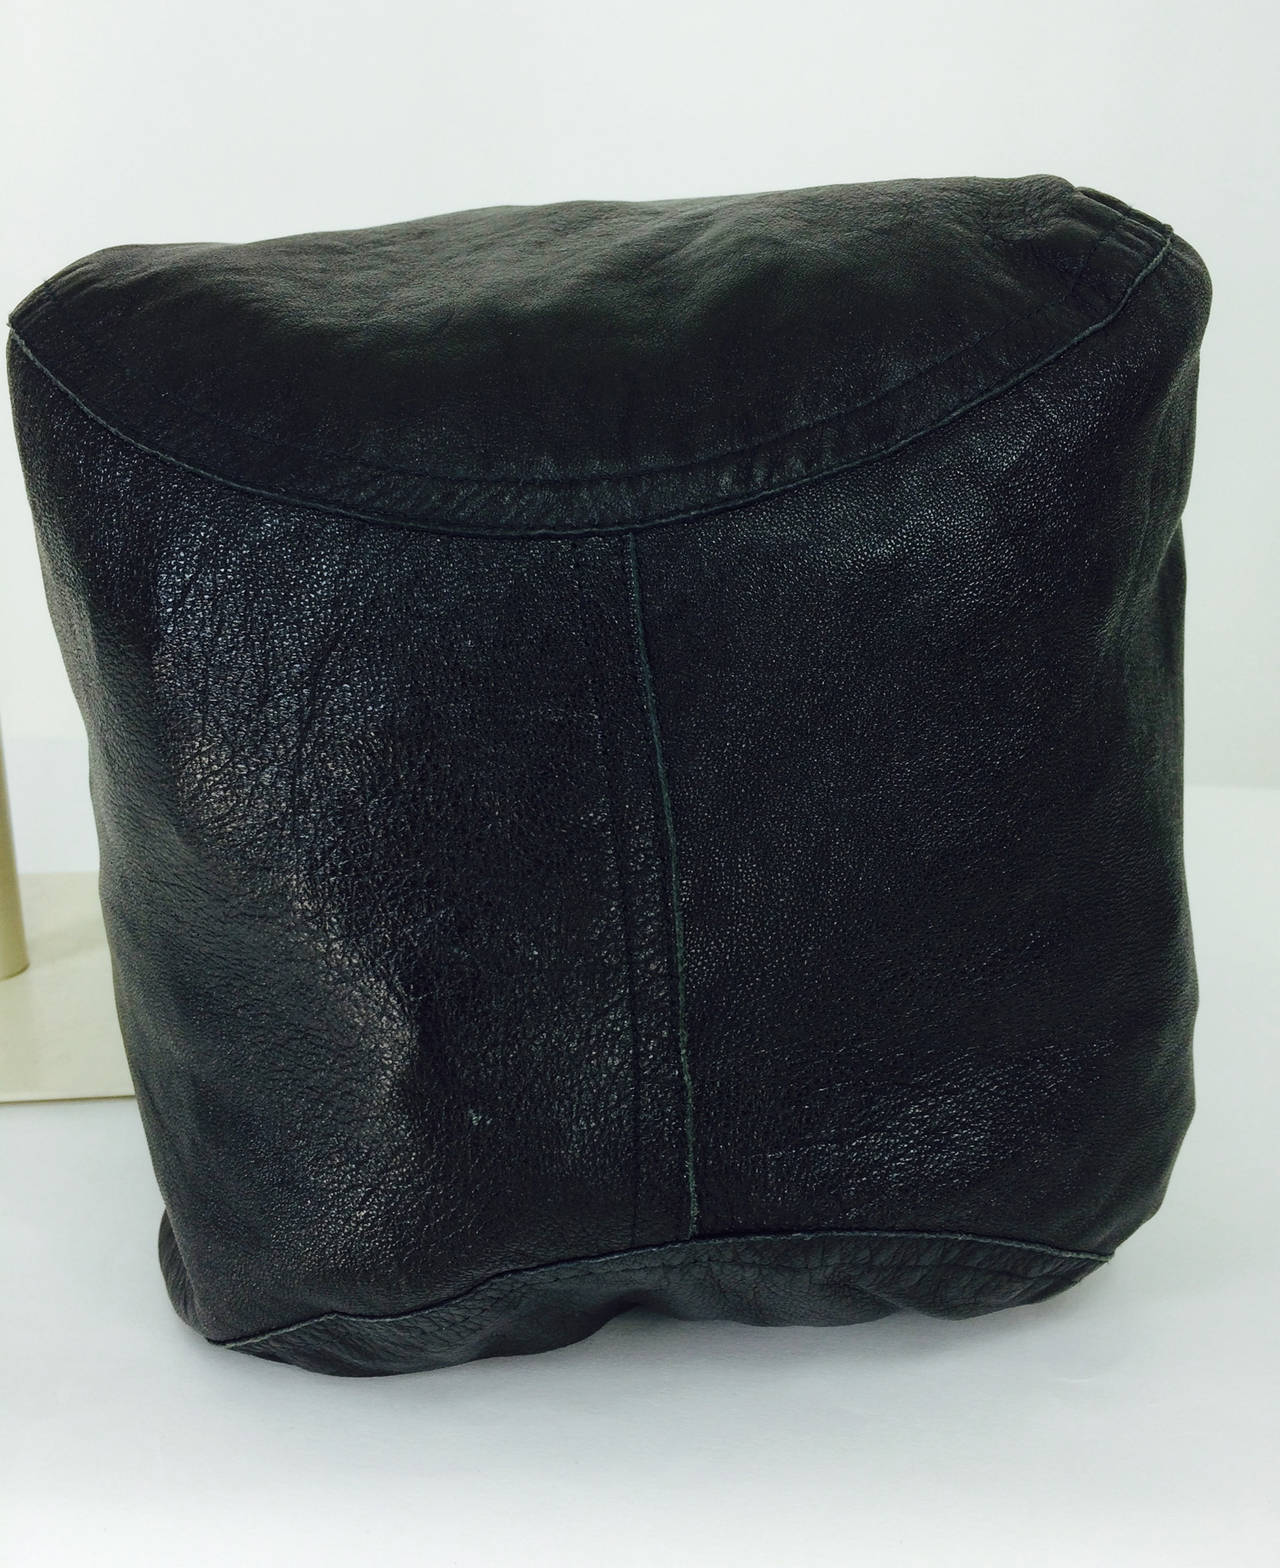 Halston black soft leather shoulder bag cover feature WWD Nov. 4, 1974 5